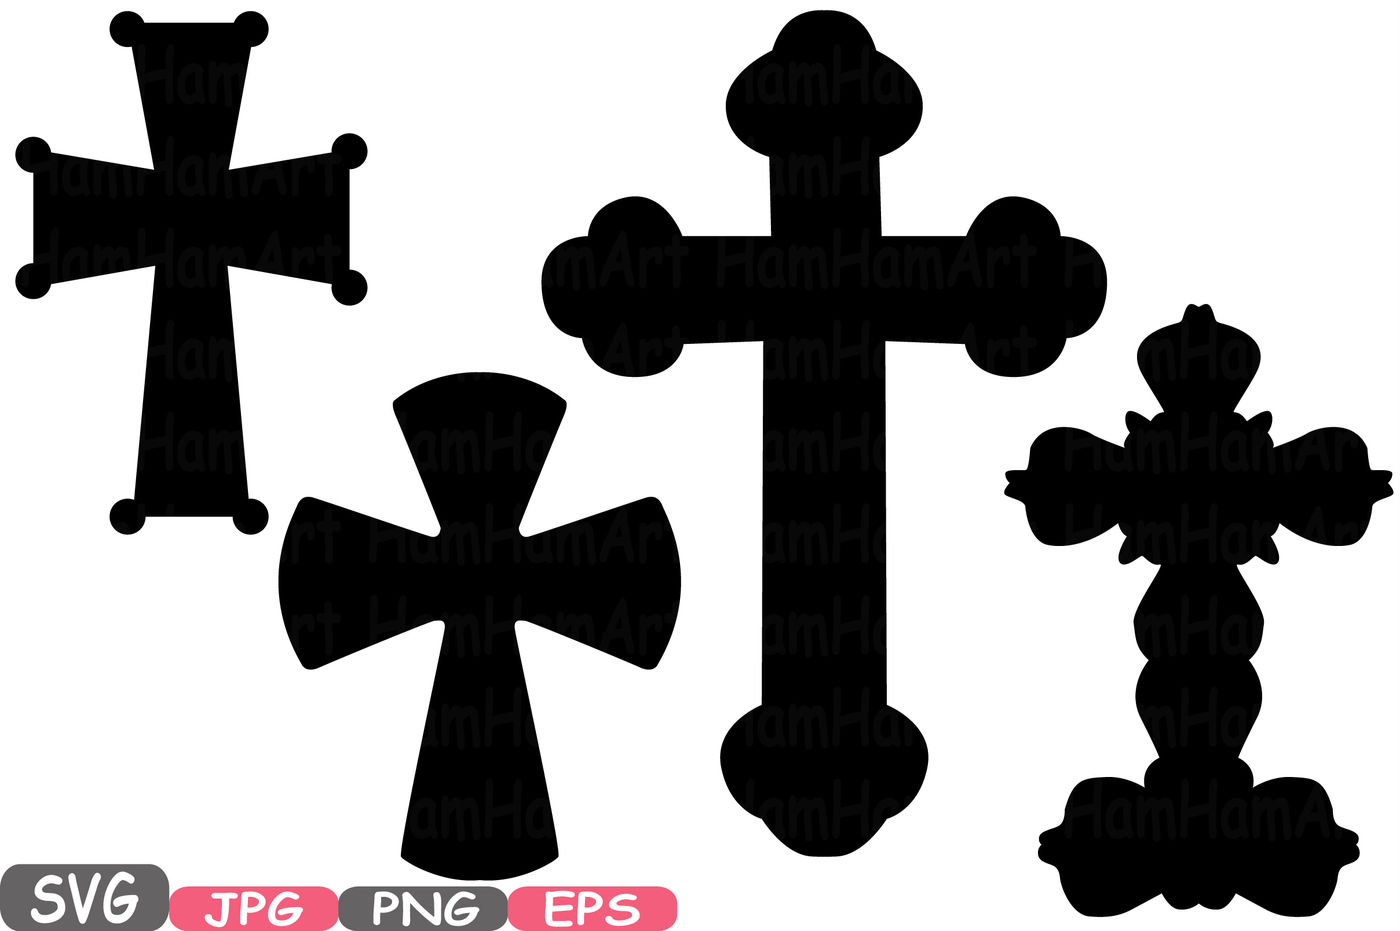 Christian Cross Svg Silhouette Cutting Files Jesus Cross Religious Monogram Clipart Cricut Bible Sign Icons God Design Cameo Vinyl 512s By Hamhamart Thehungryjpeg Com